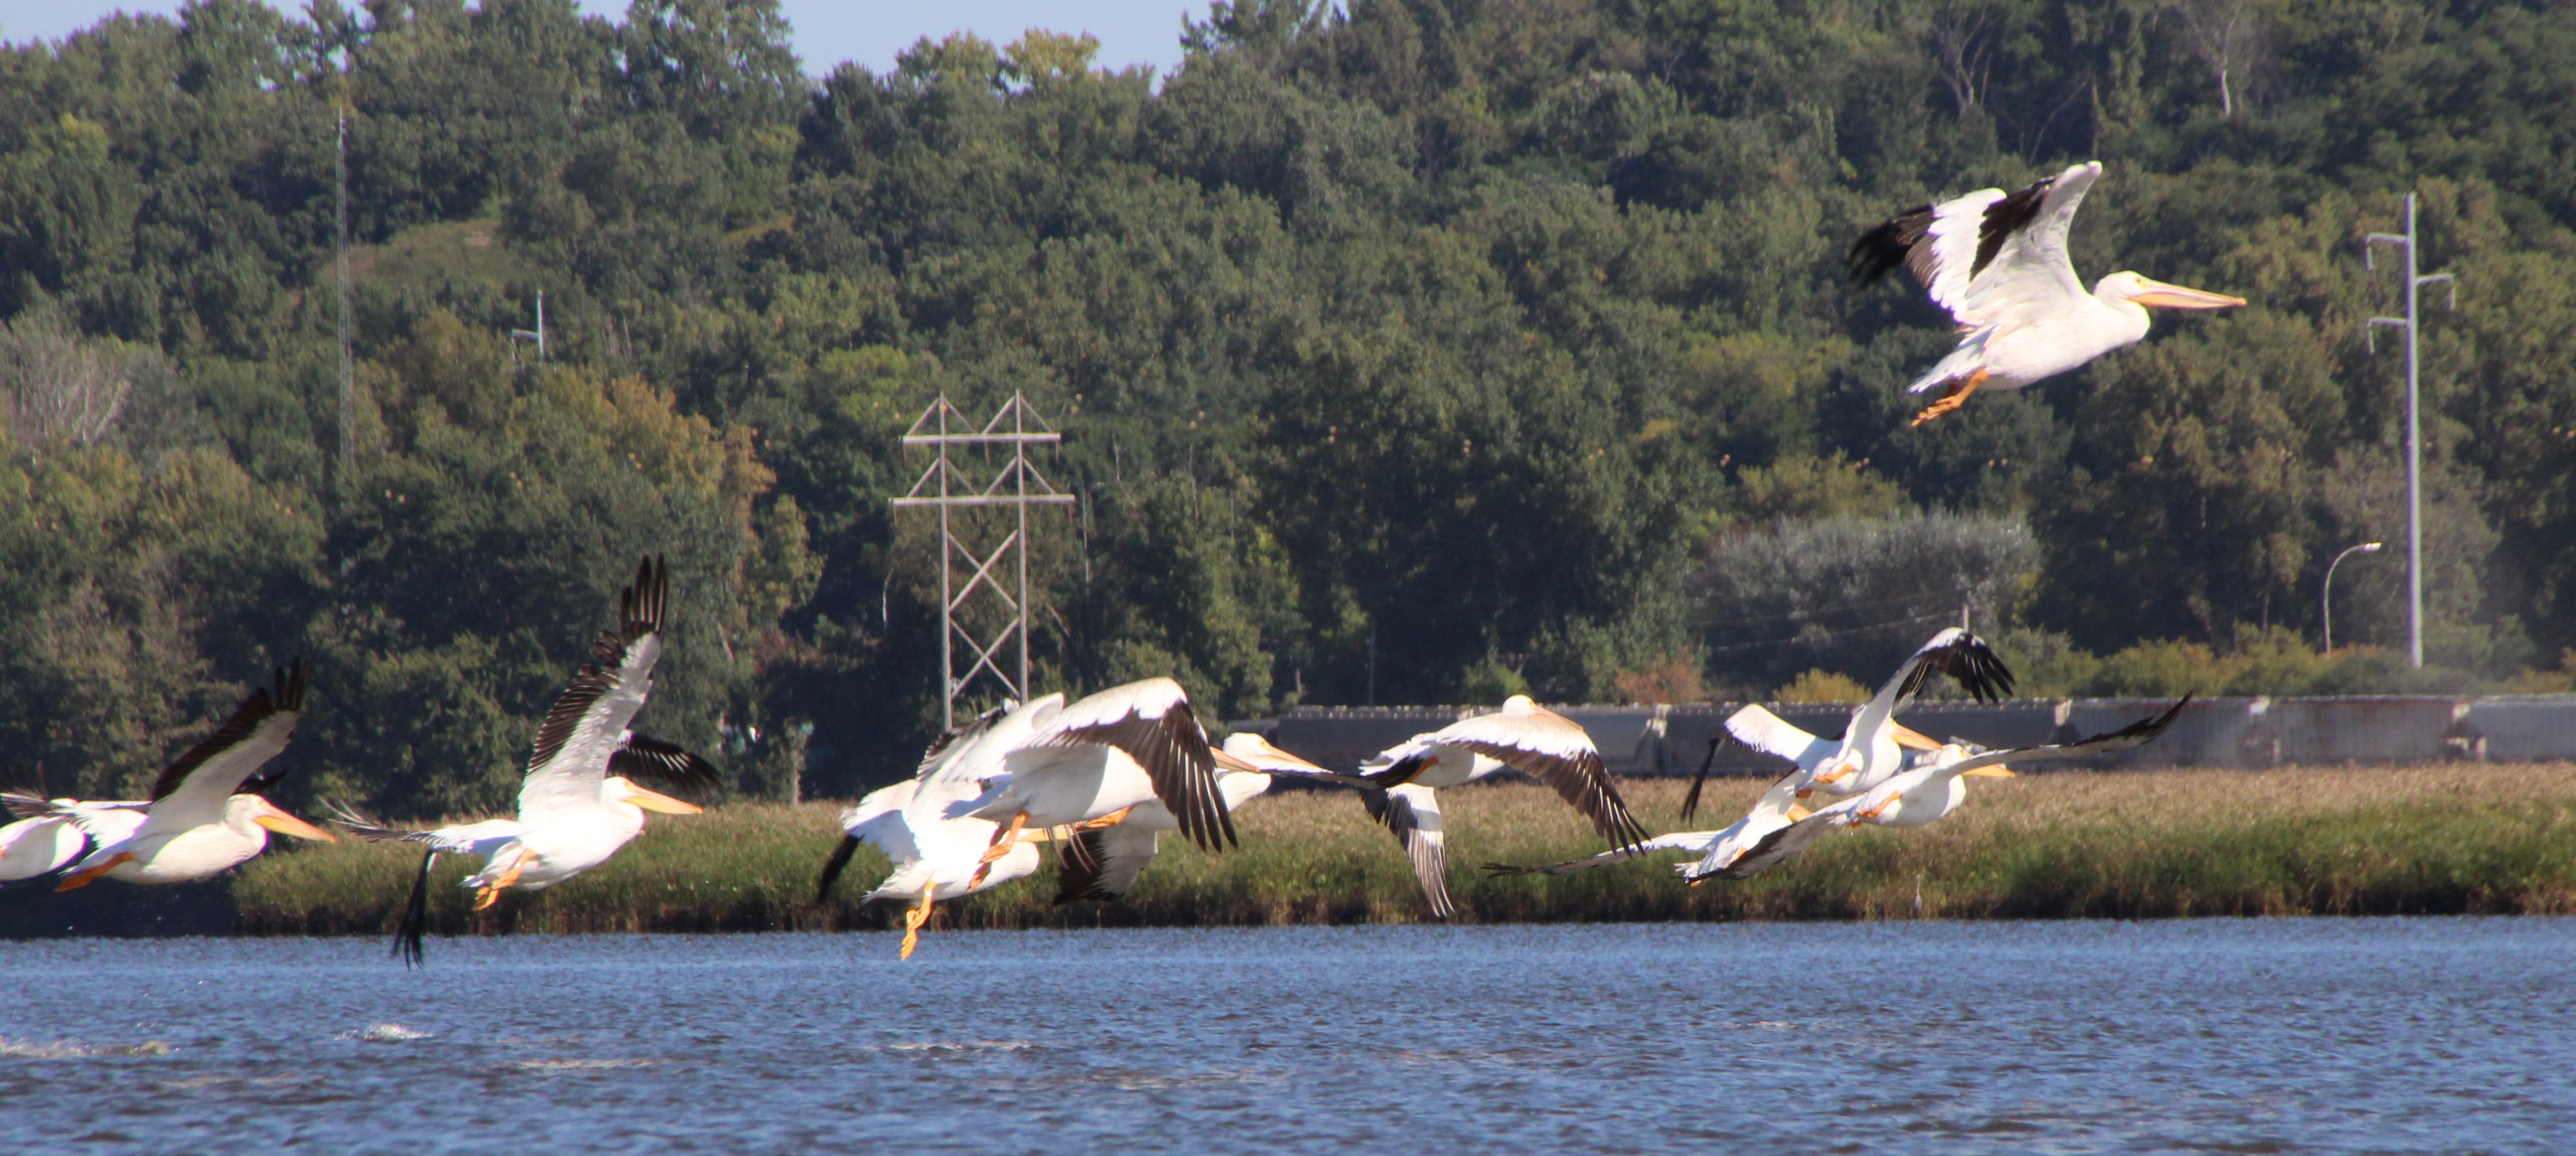 Pelicans take flight from Pig's Eye Lake.